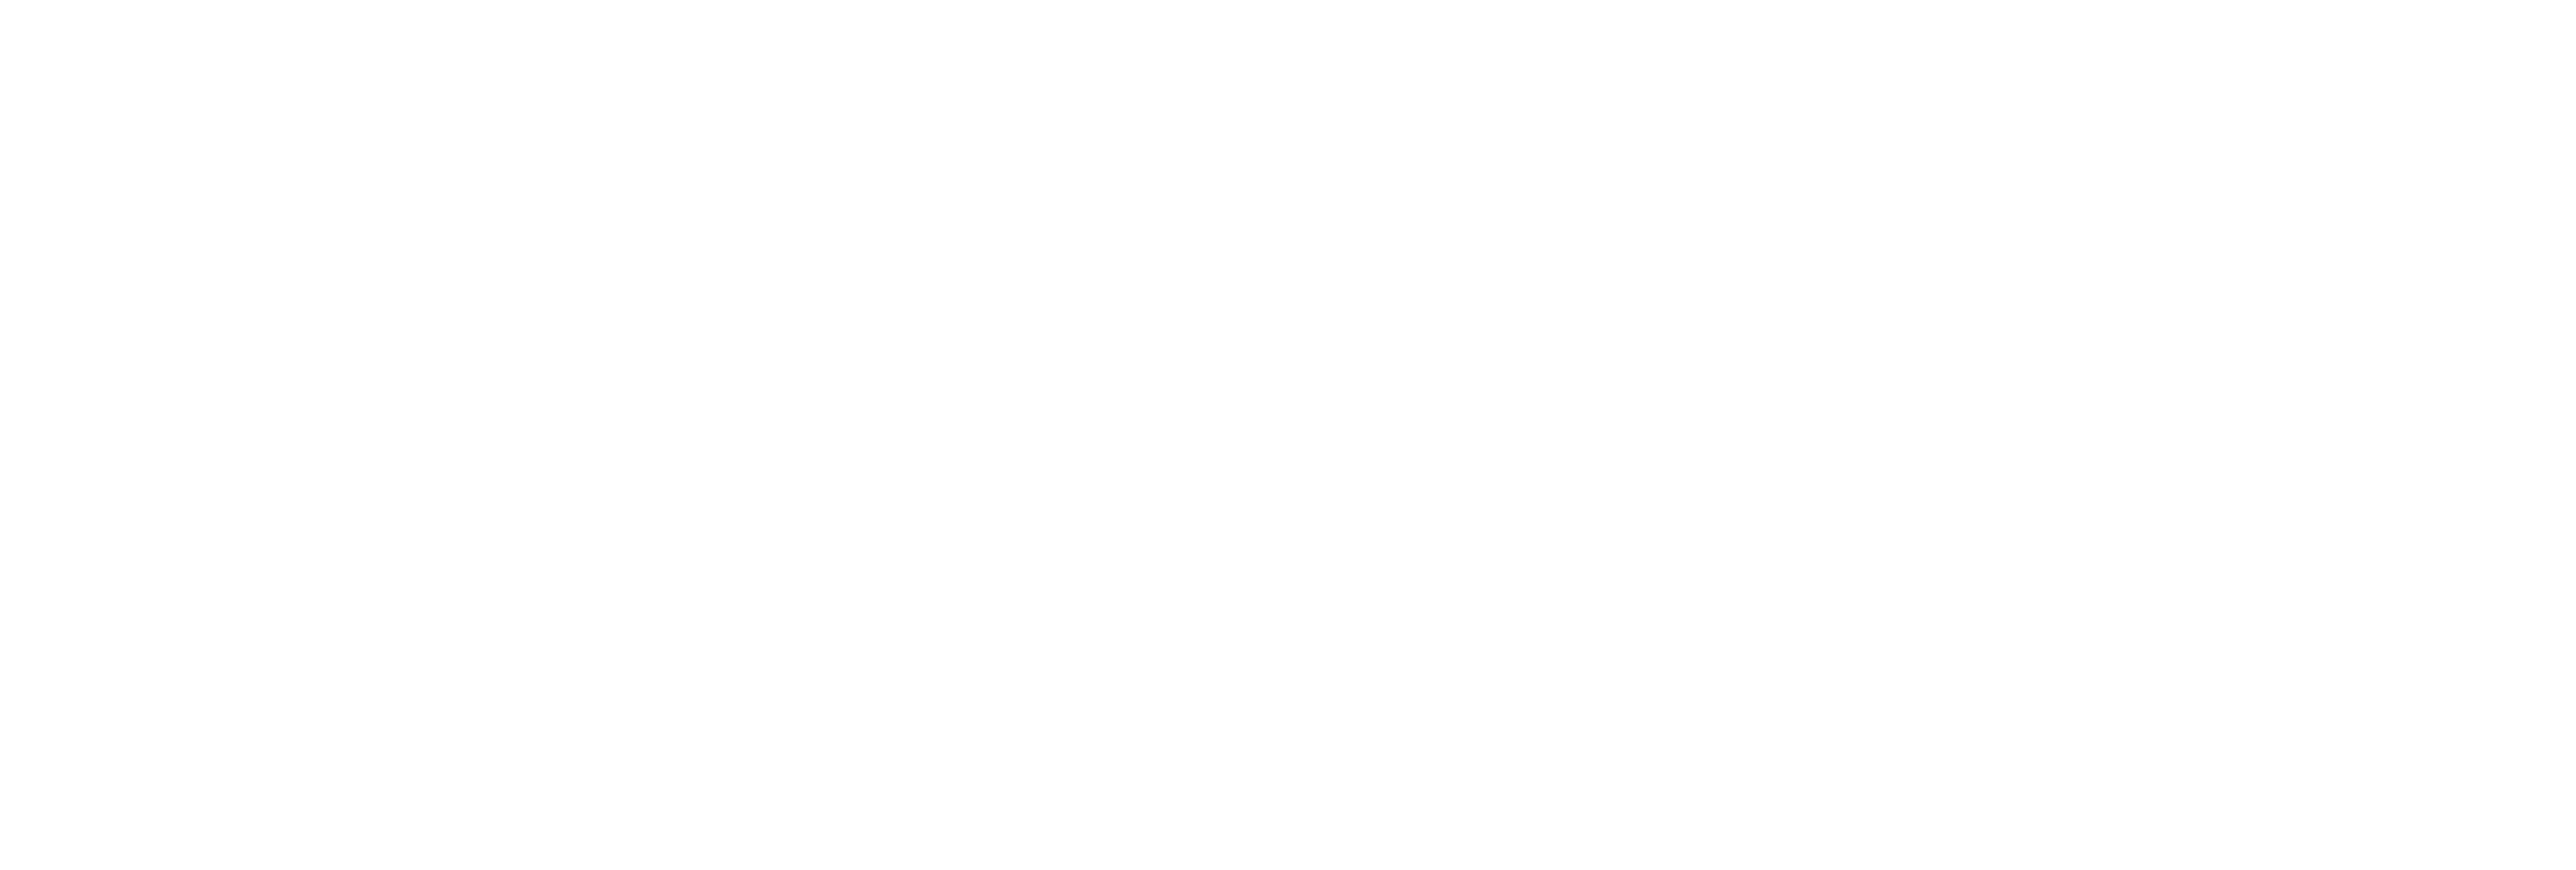 AniCura Indautxu Hospital Veterinario logo